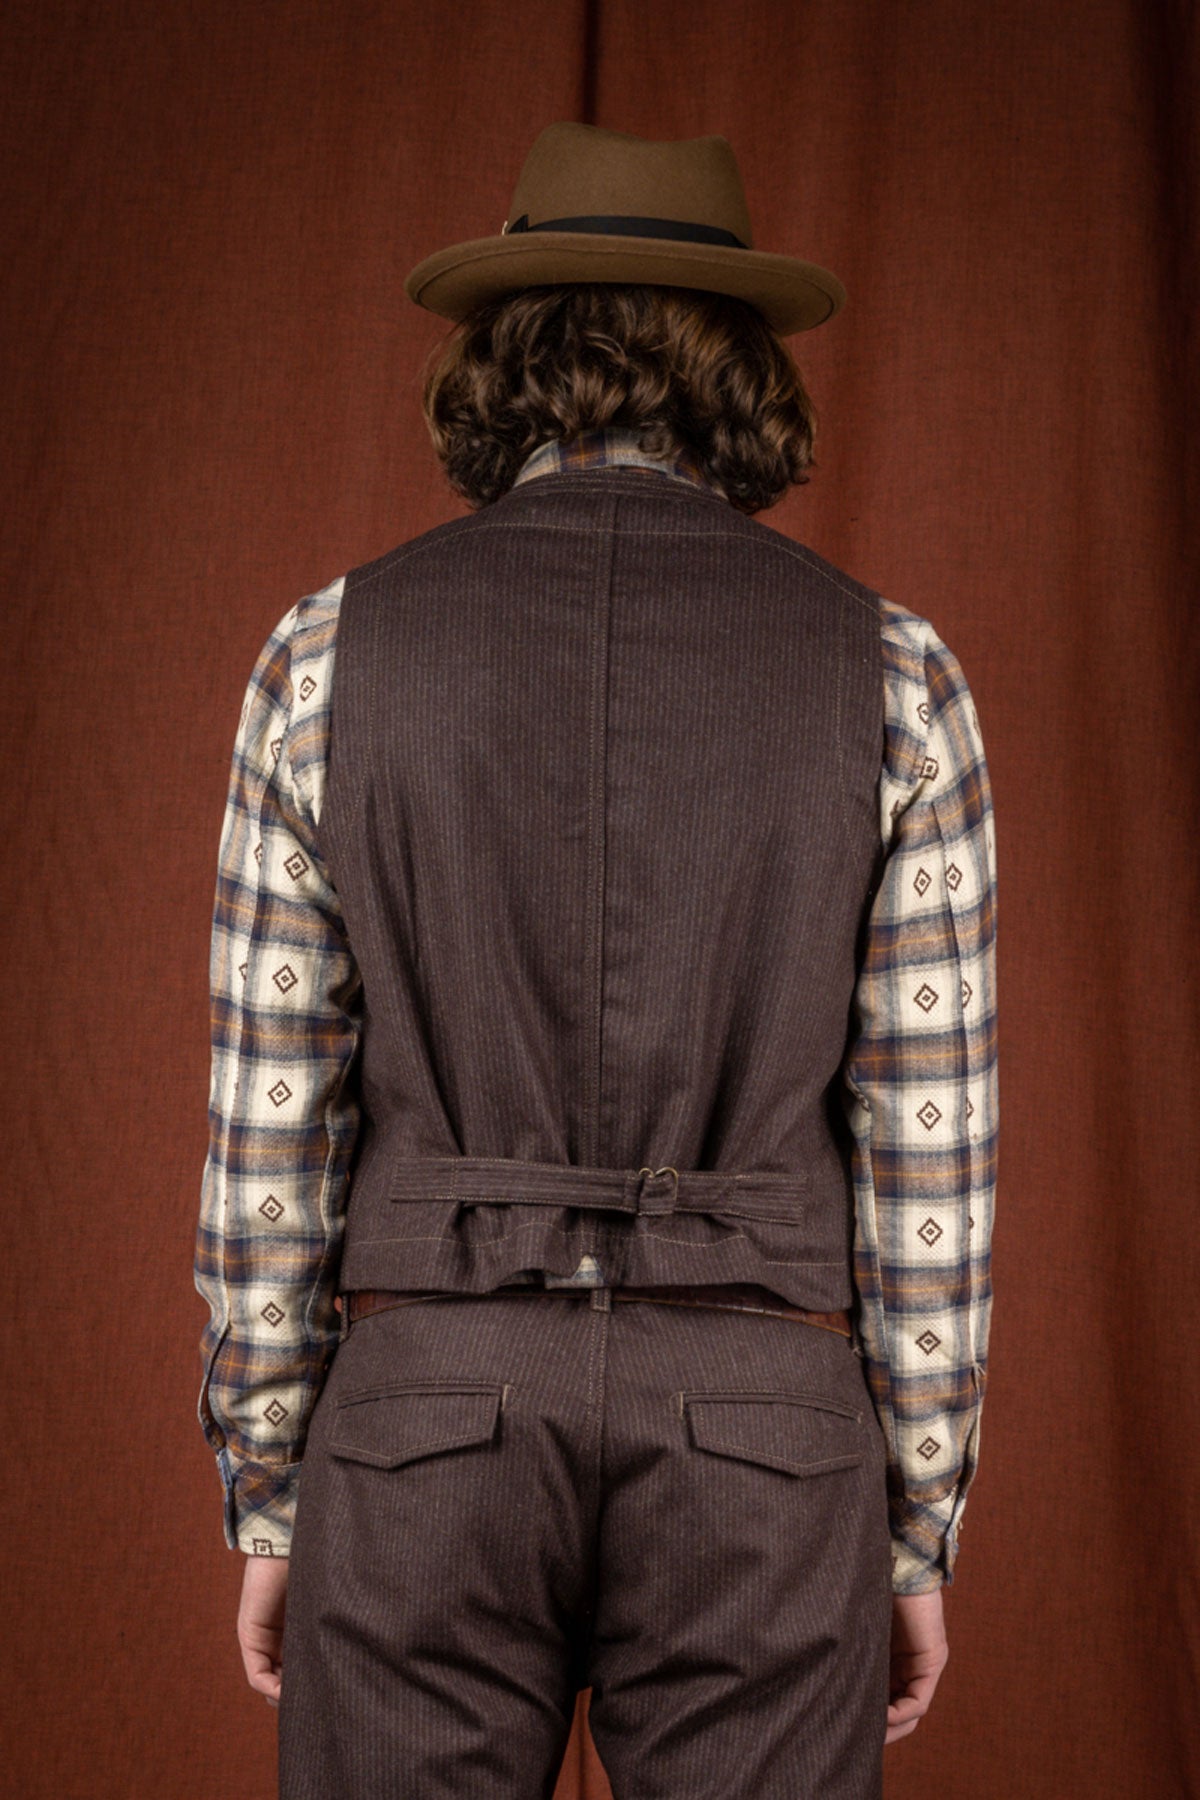 Scarti Lab - 403 / SE462 Work Vest in Brown Pinstripe Wool Flannel